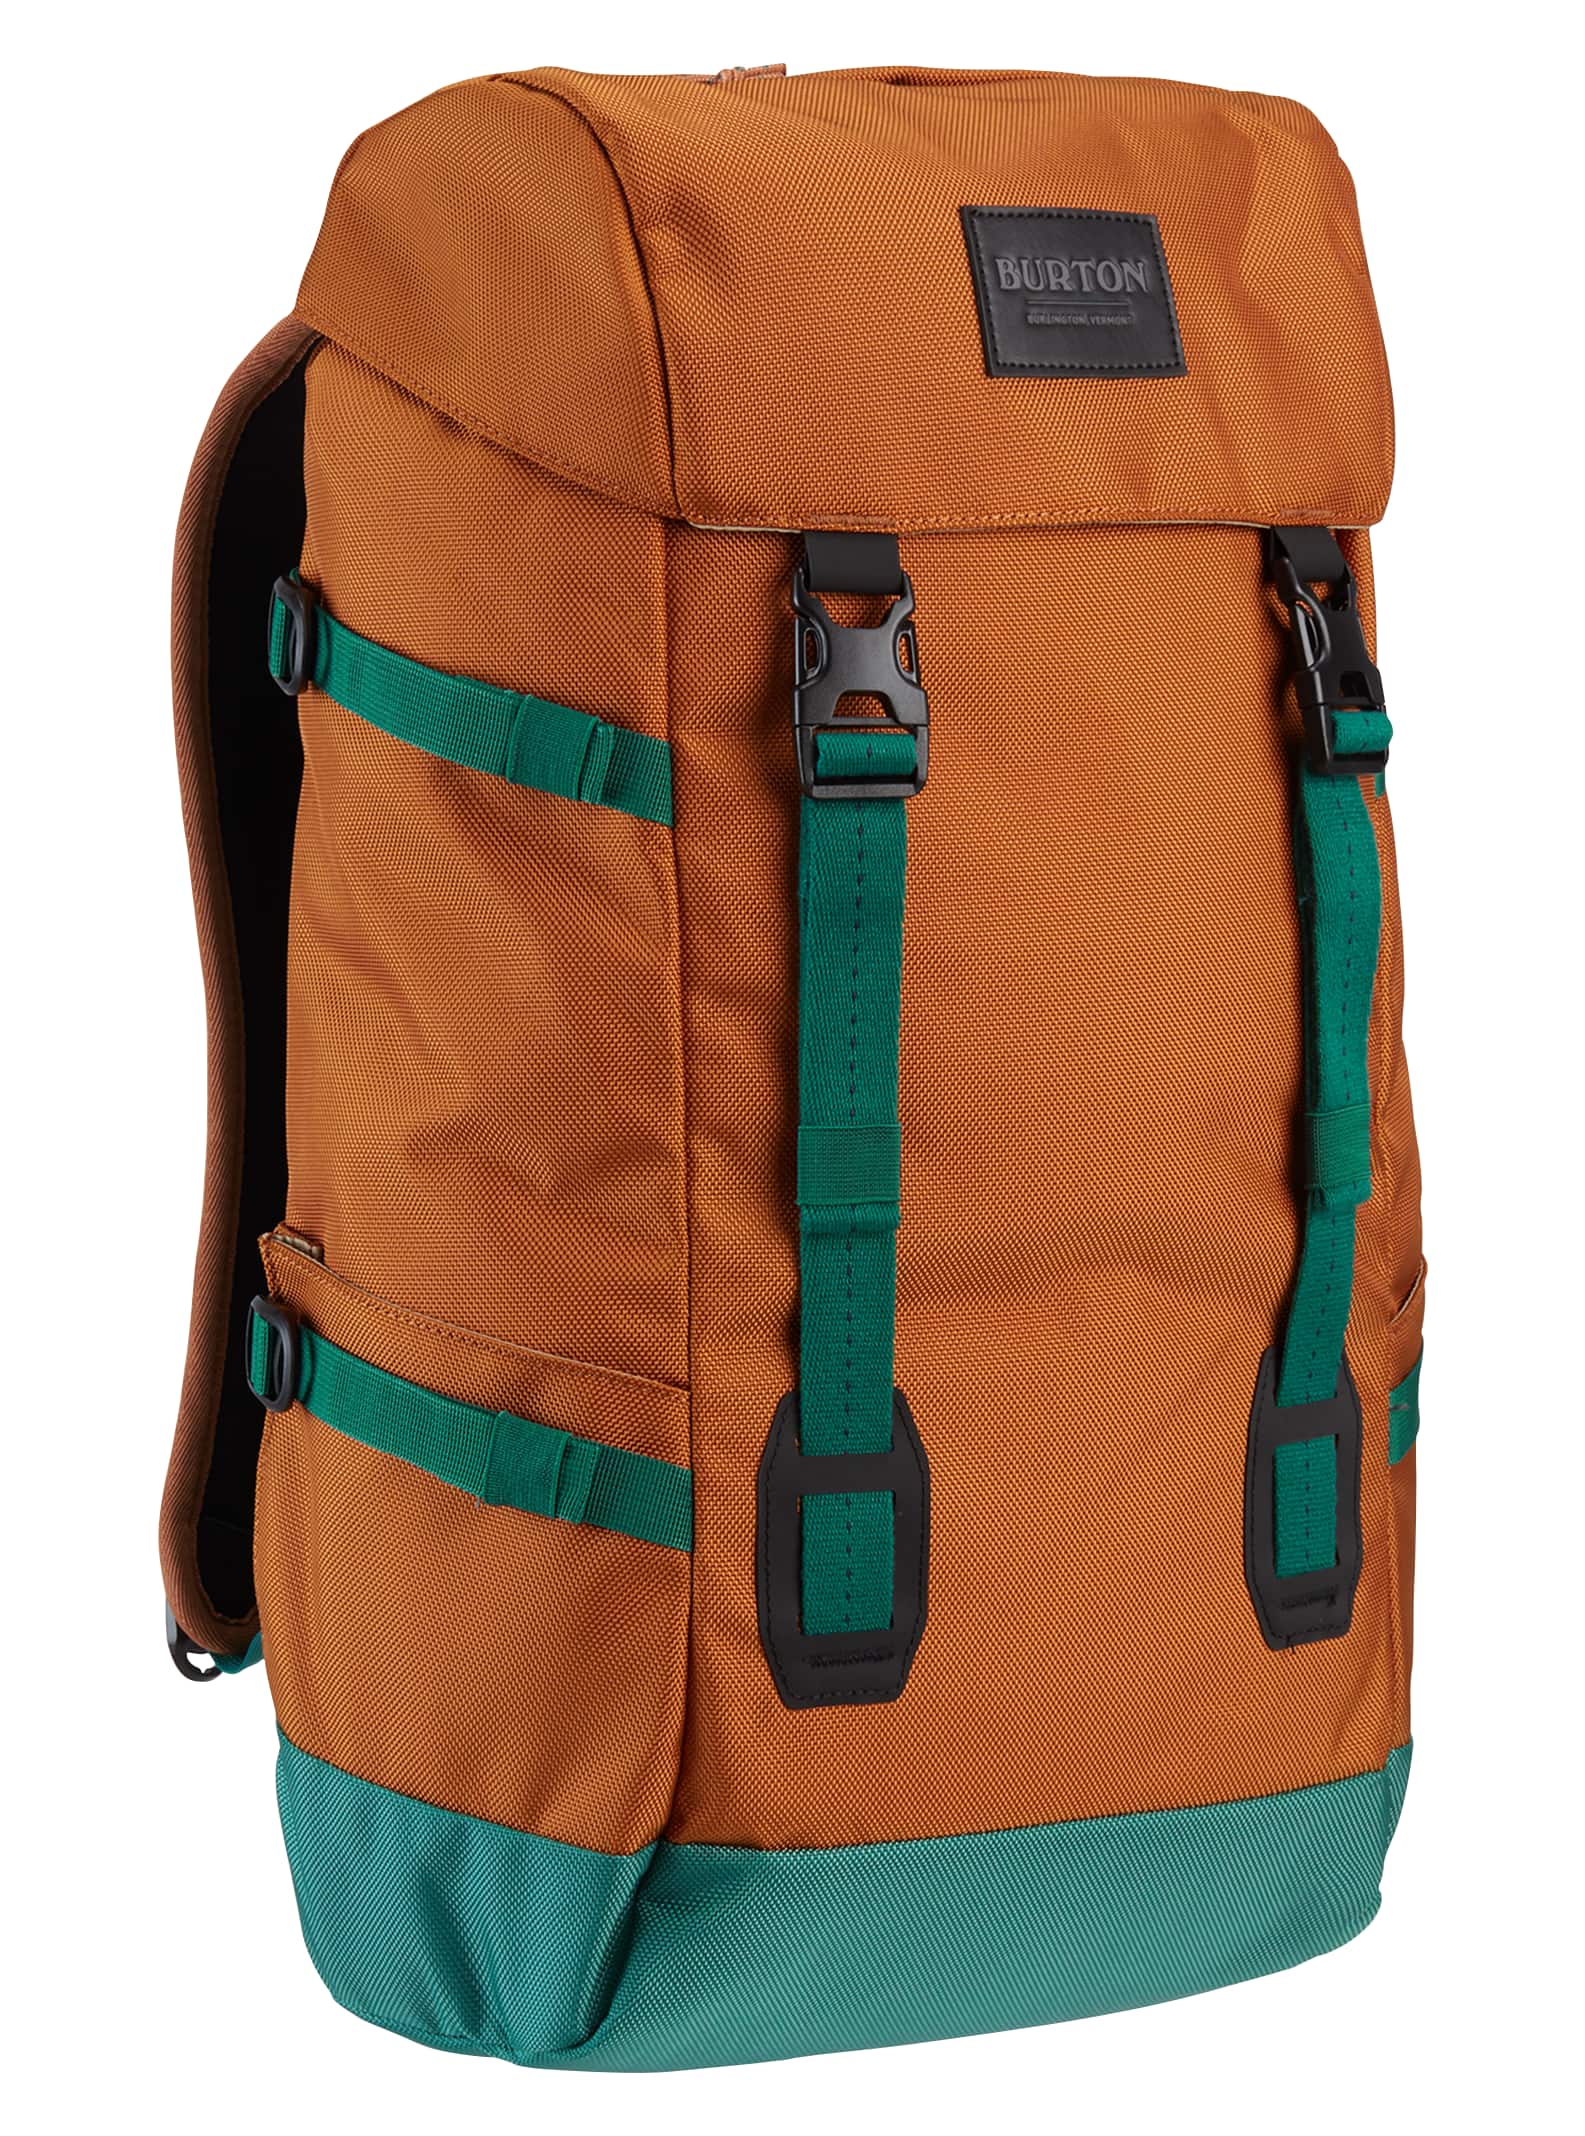 Burton Tinder 2.0 30L Backpack | Burton.com Winter 2021 ES